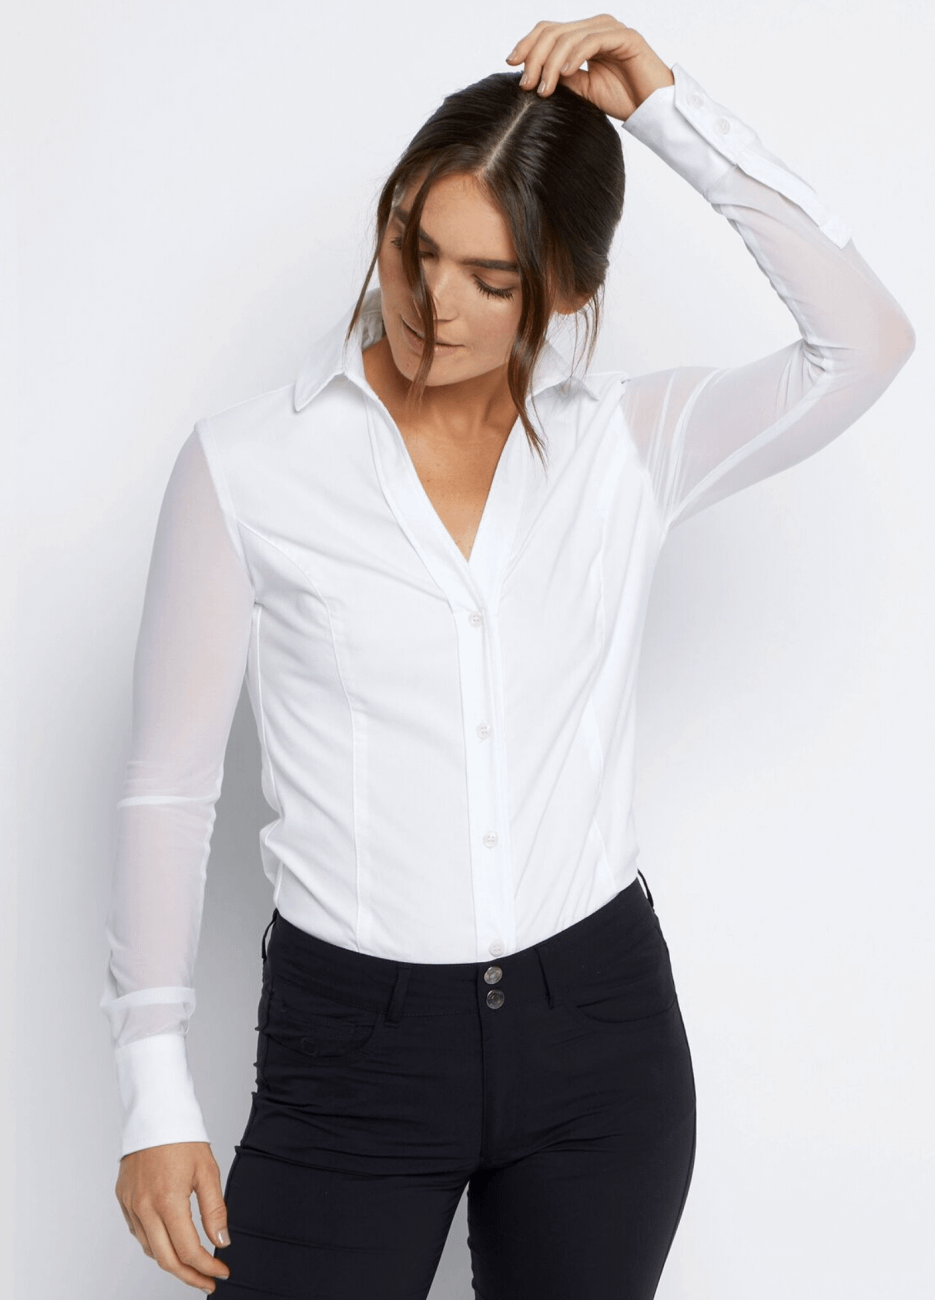 Anatomie White Woven/Mesh Button Down Collared Shirt